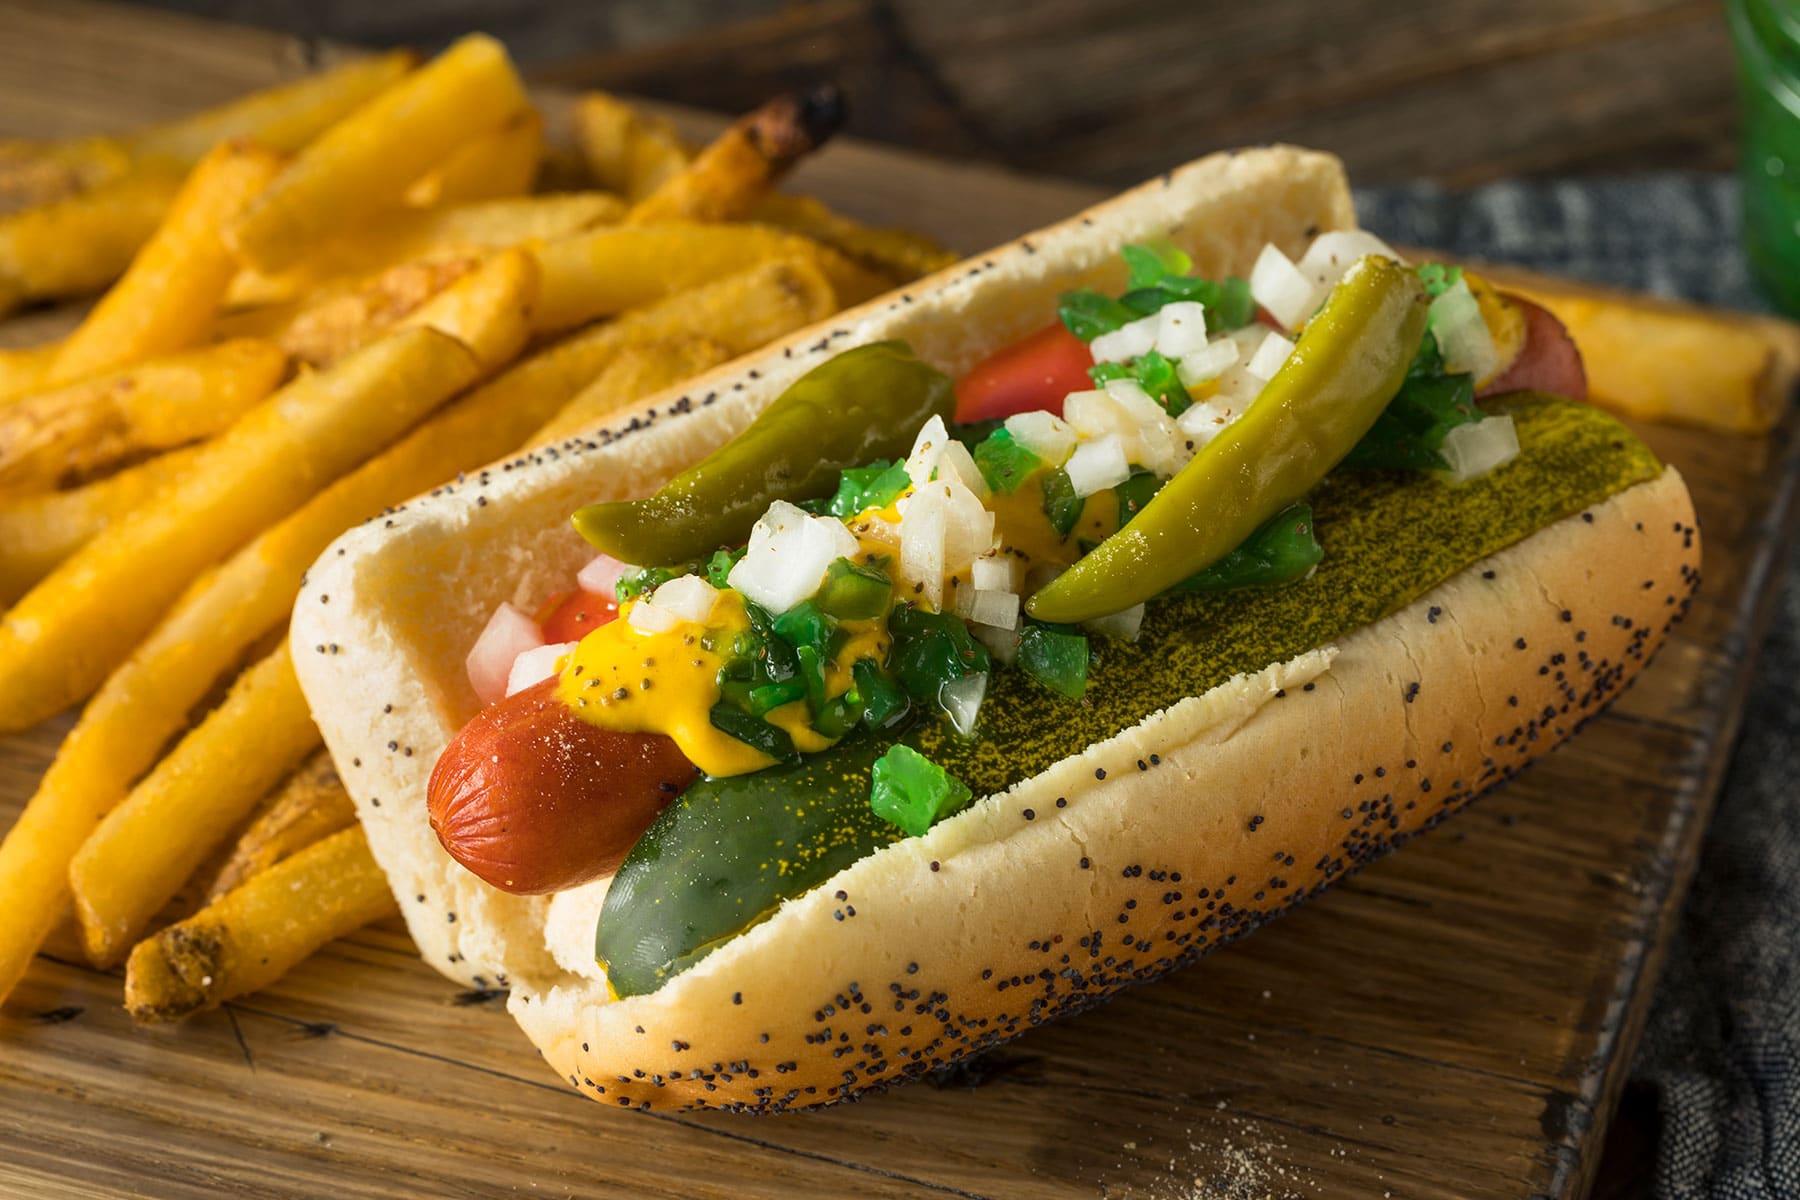 Stylized photo of a Chicago style hot dog